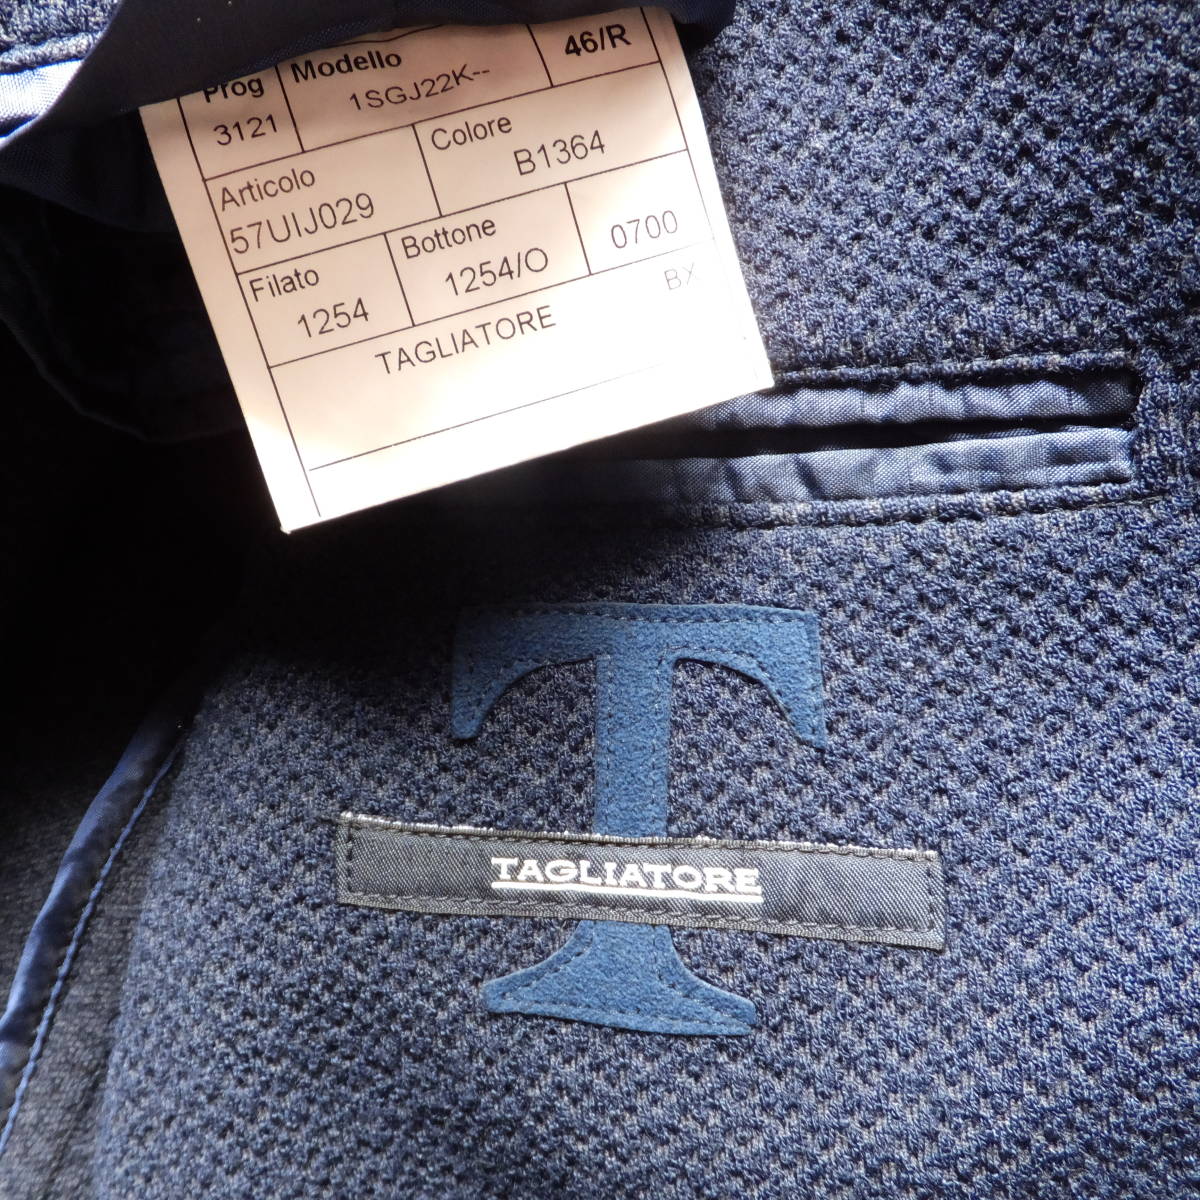 TAGLIATORE Tagliatore 2B blaser Tailor jacket dark blue ... manner cloth navy size 46 Italy made wool .